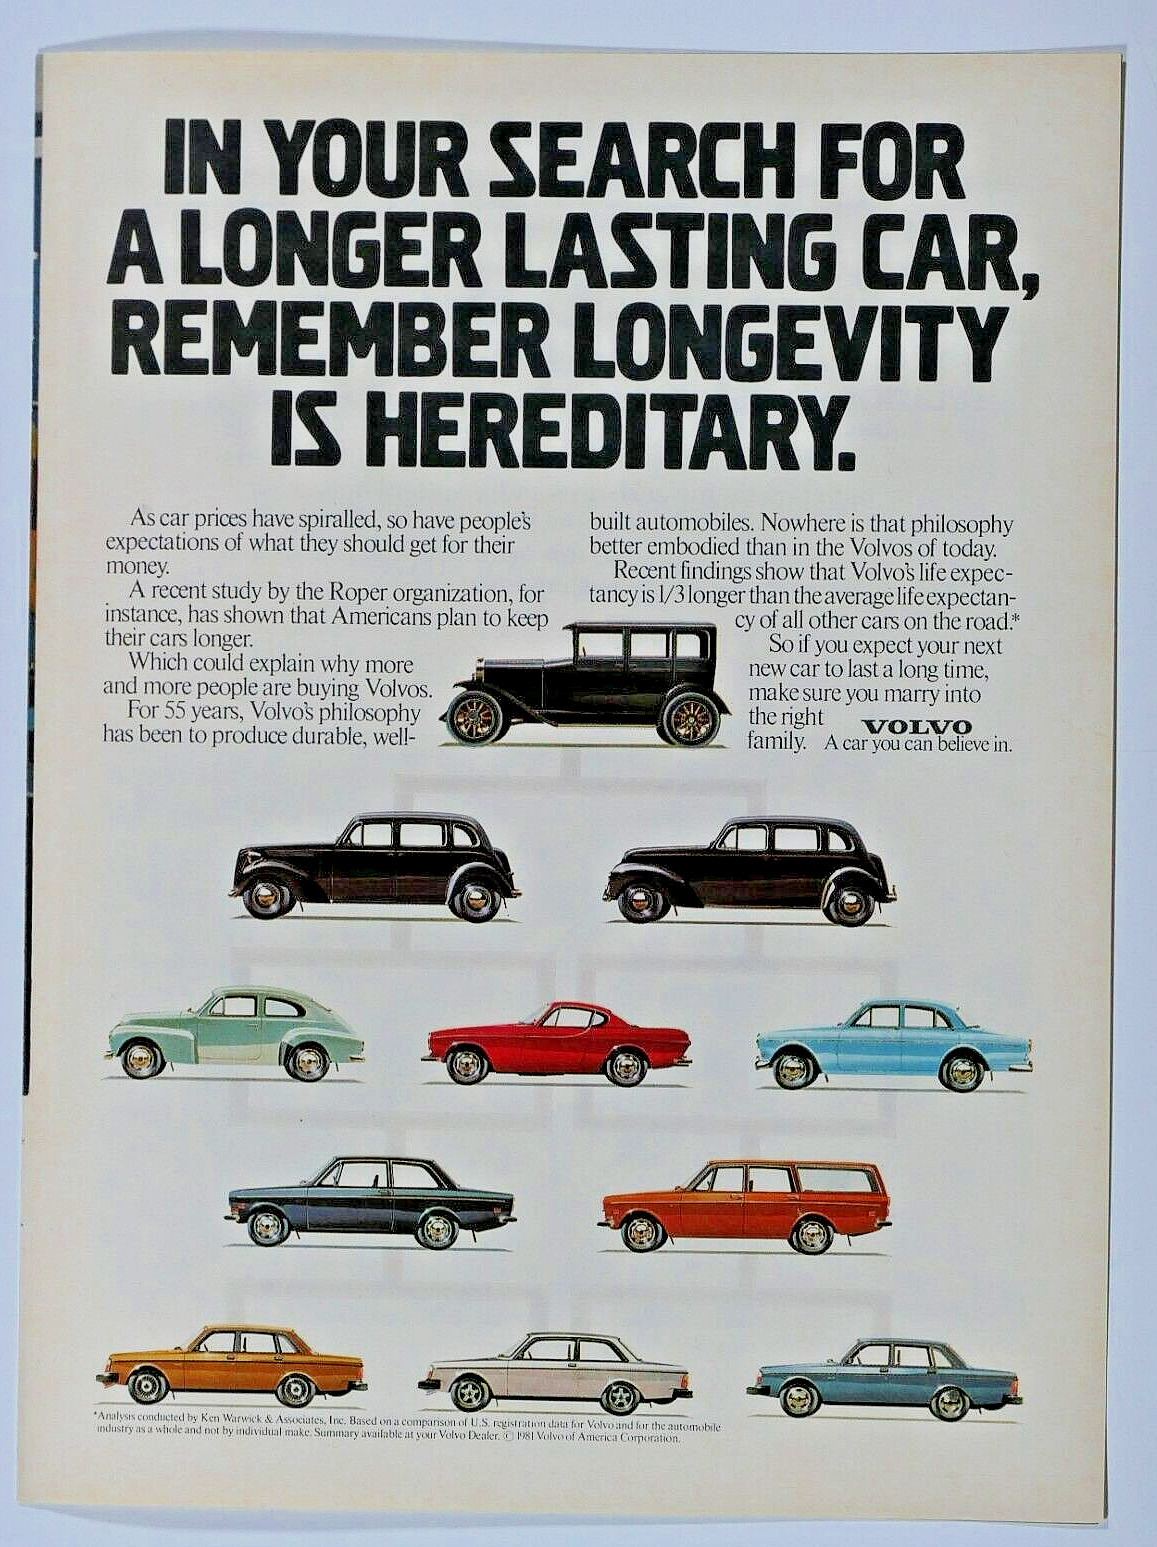 1982 Volvo Vintage Longevity Is Hereditary Original Print Ad 8.5 x 11